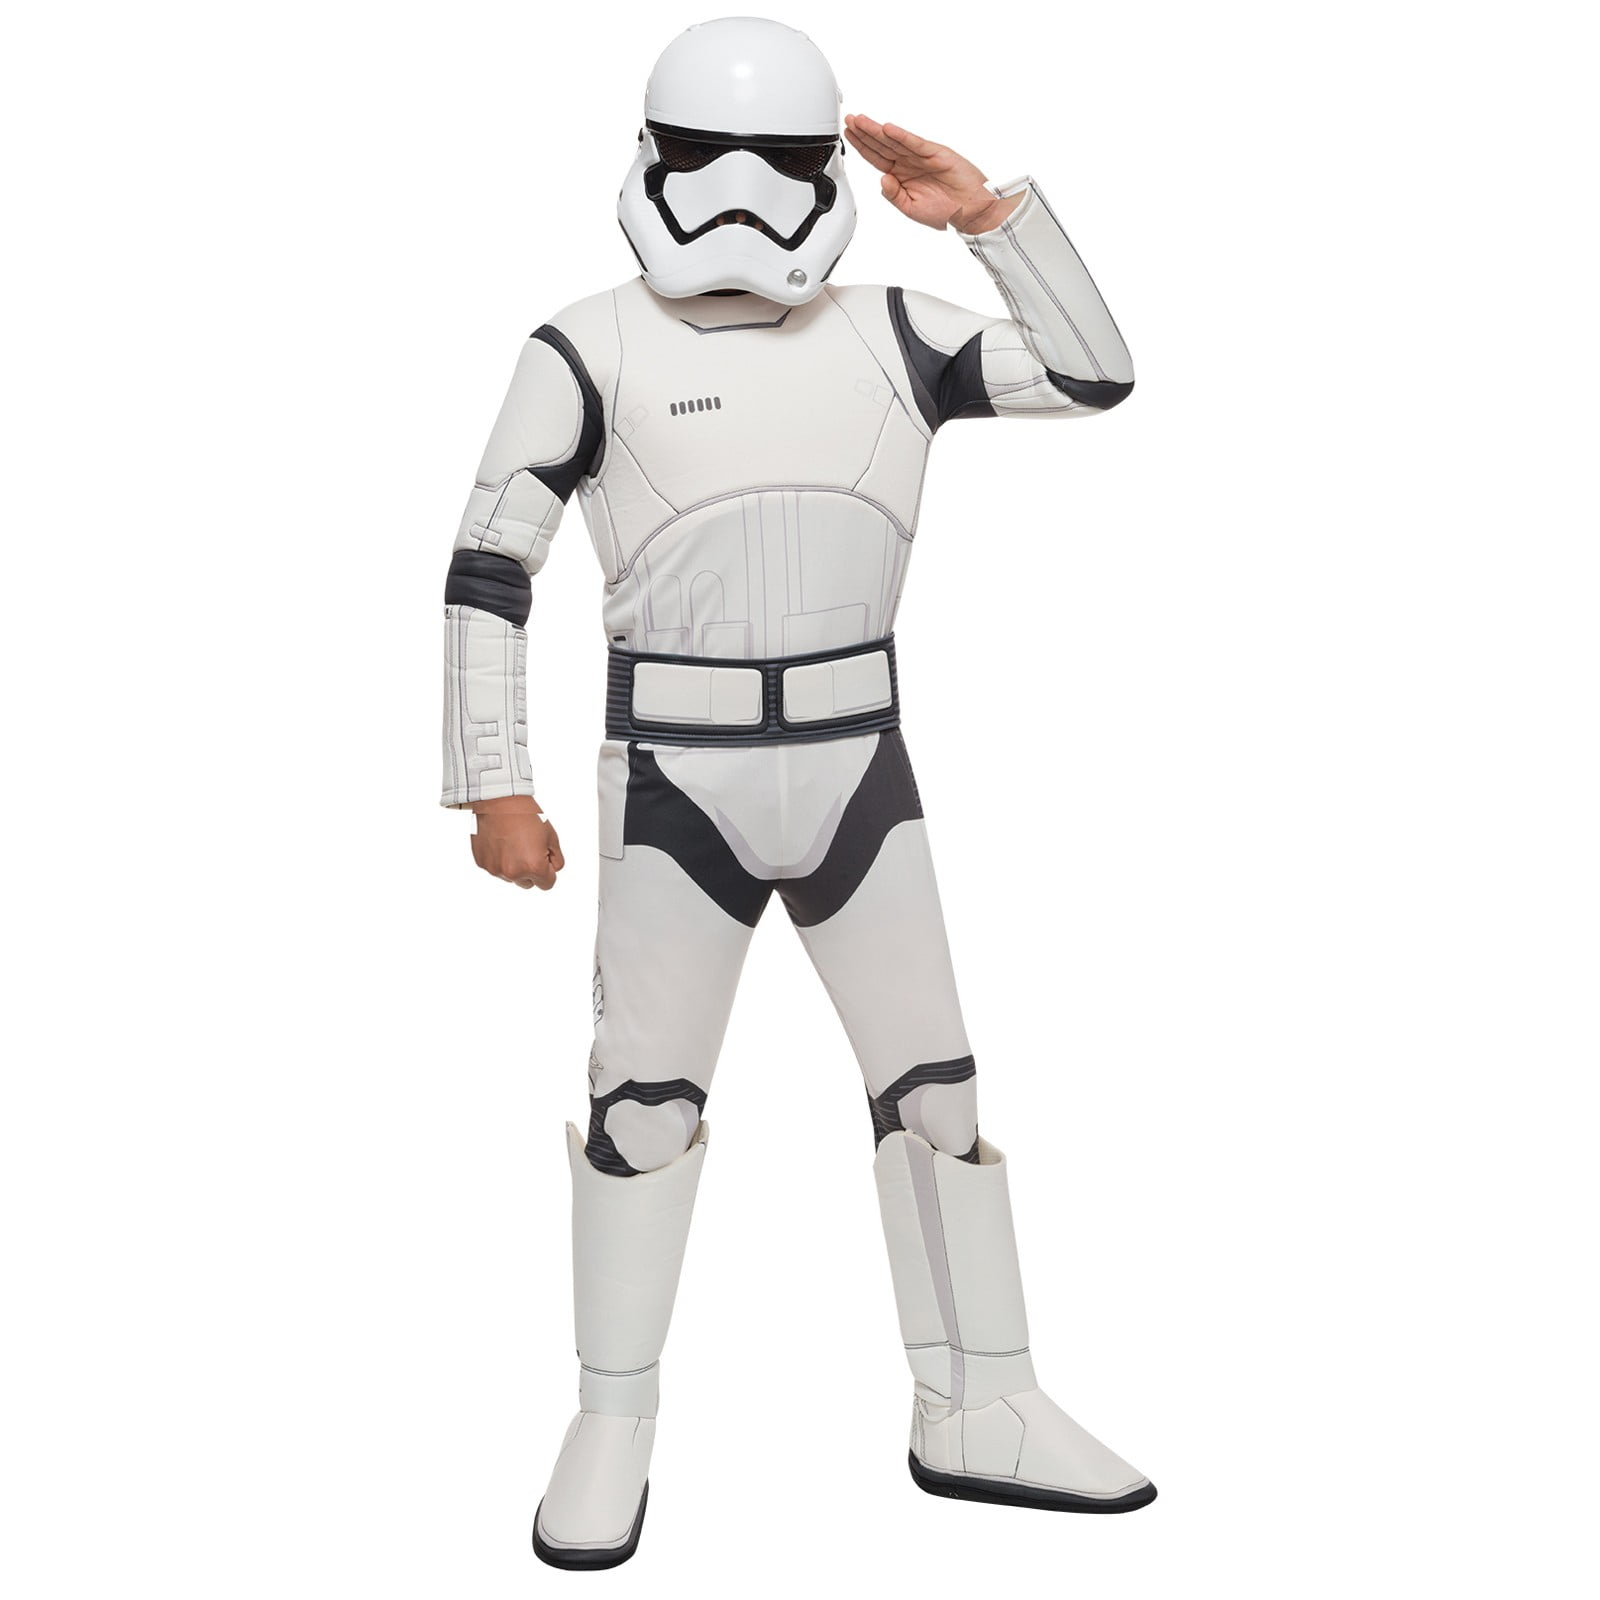 Disney Store Star Wars STORMTROOPER FORCE AWAKENS COSTUME Halloween 11 12 13 